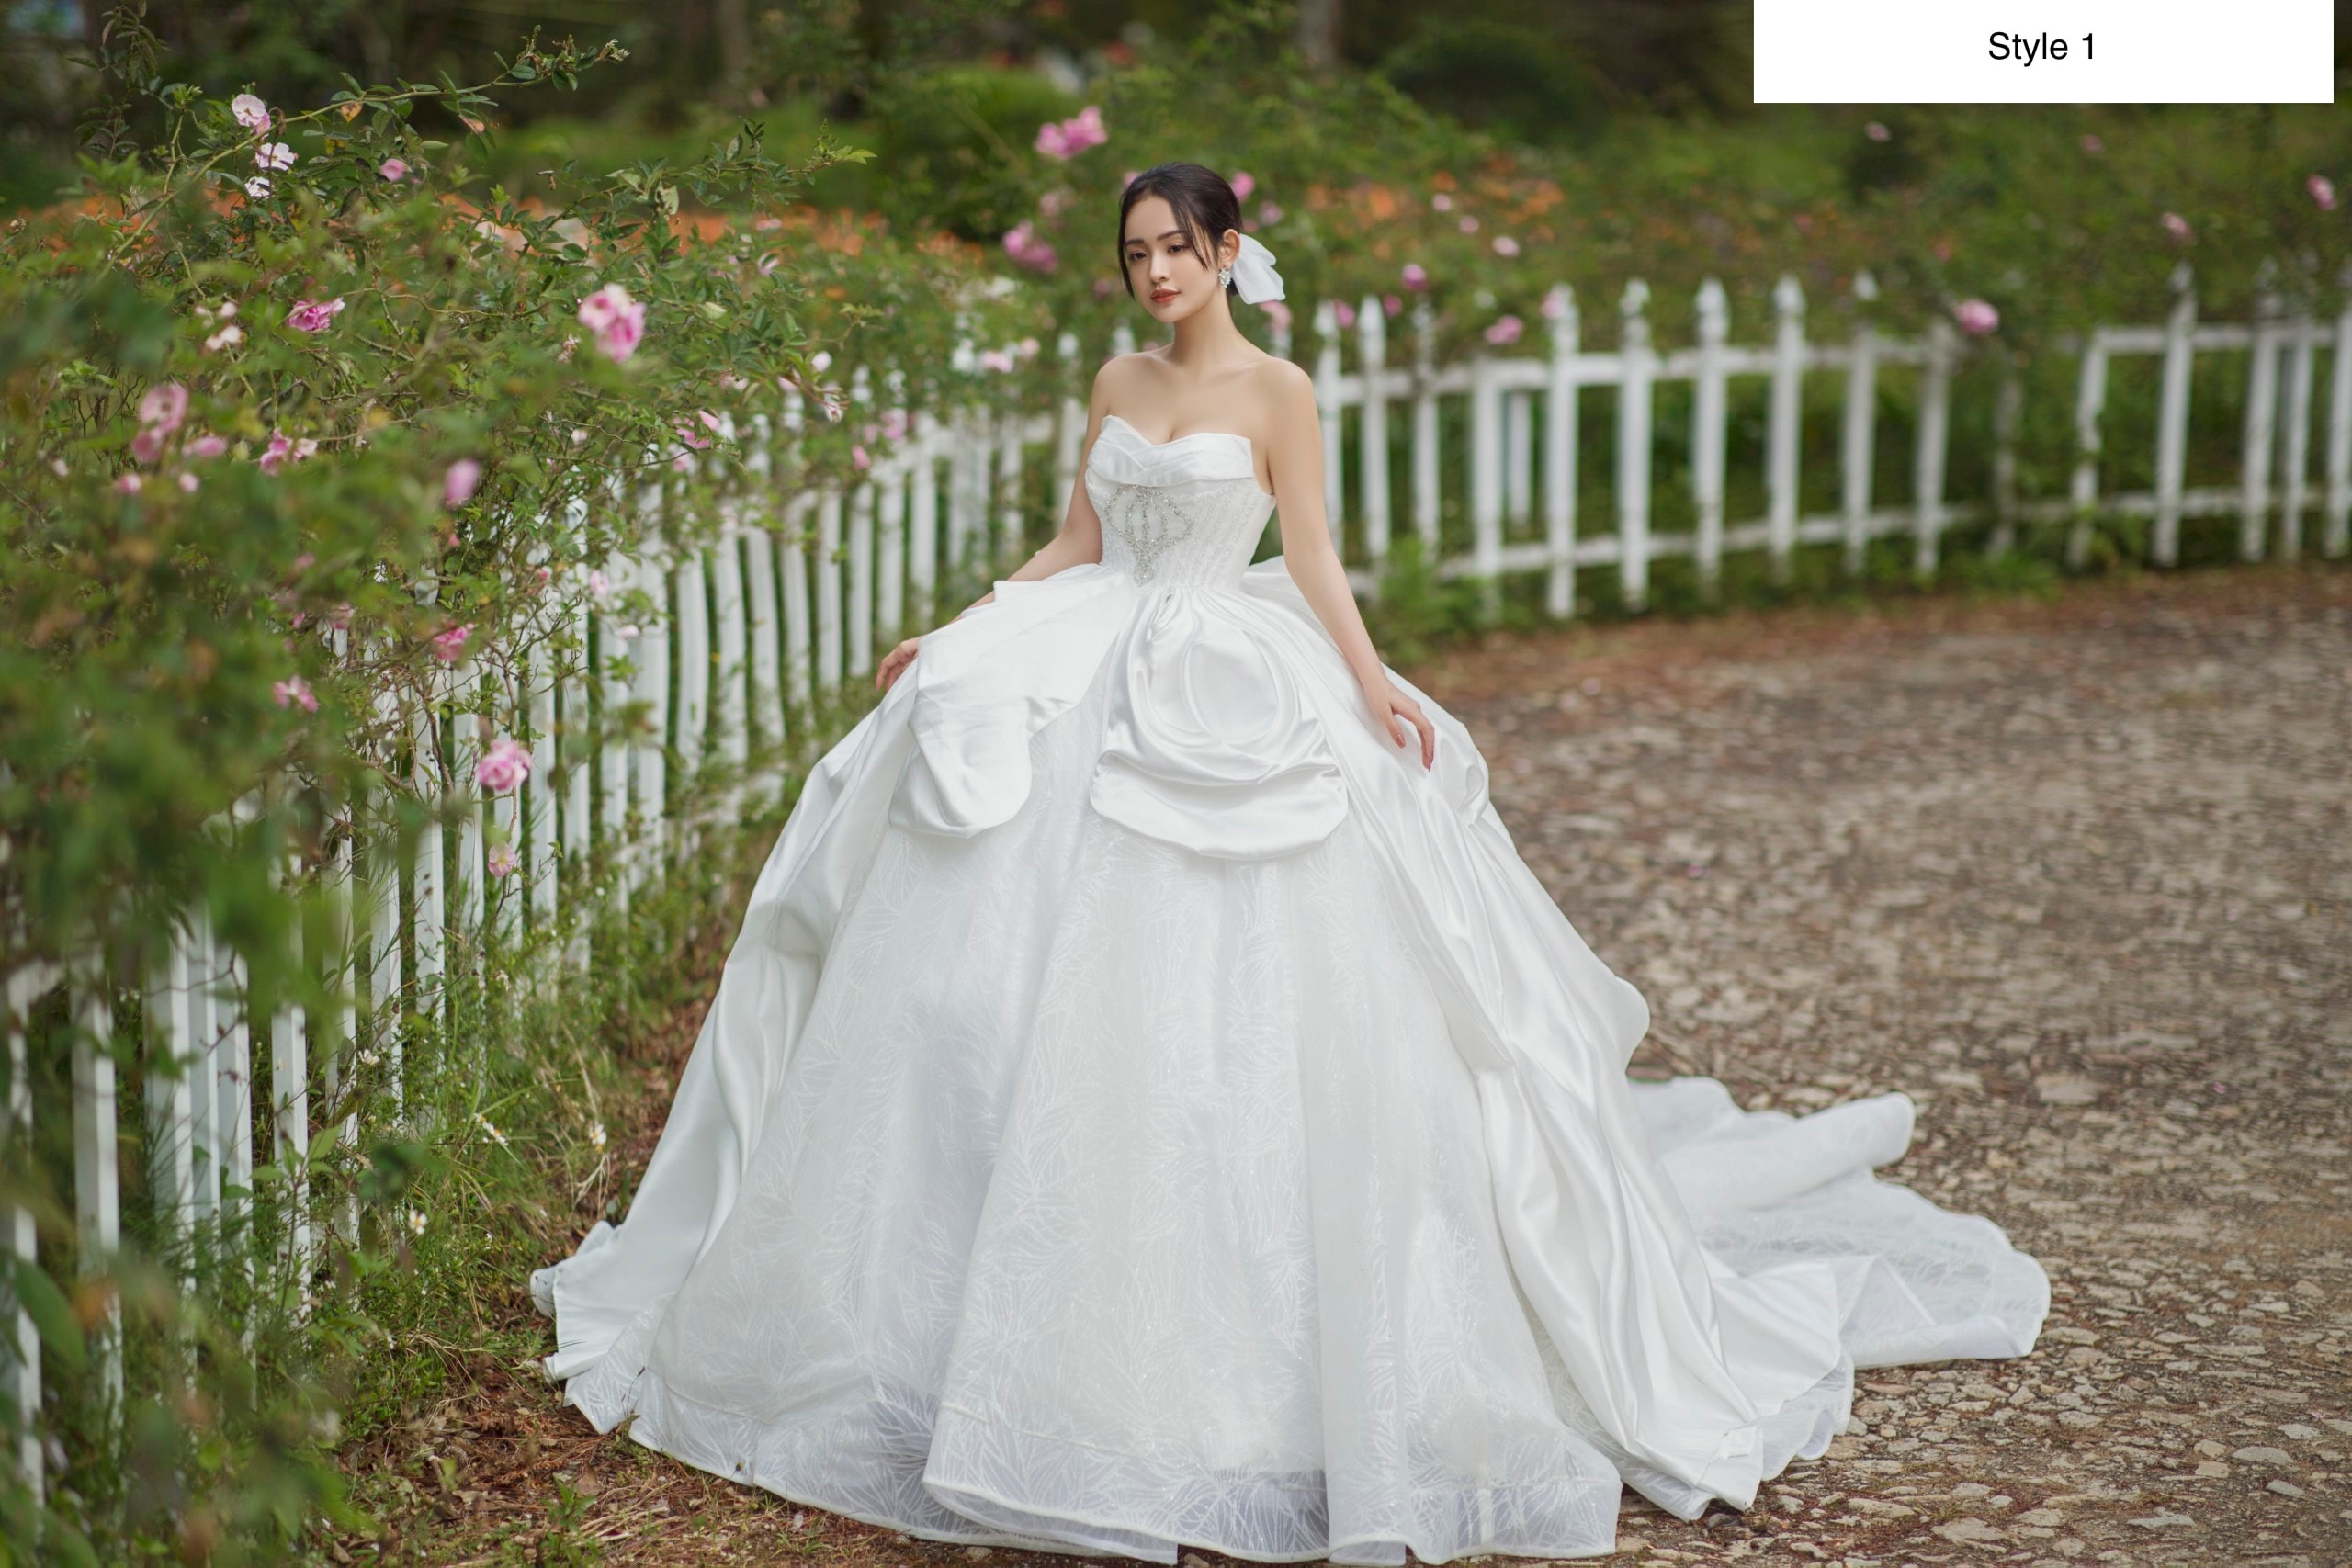 Aisle Style: The Wedding Dress | Pittsburgh Magazine